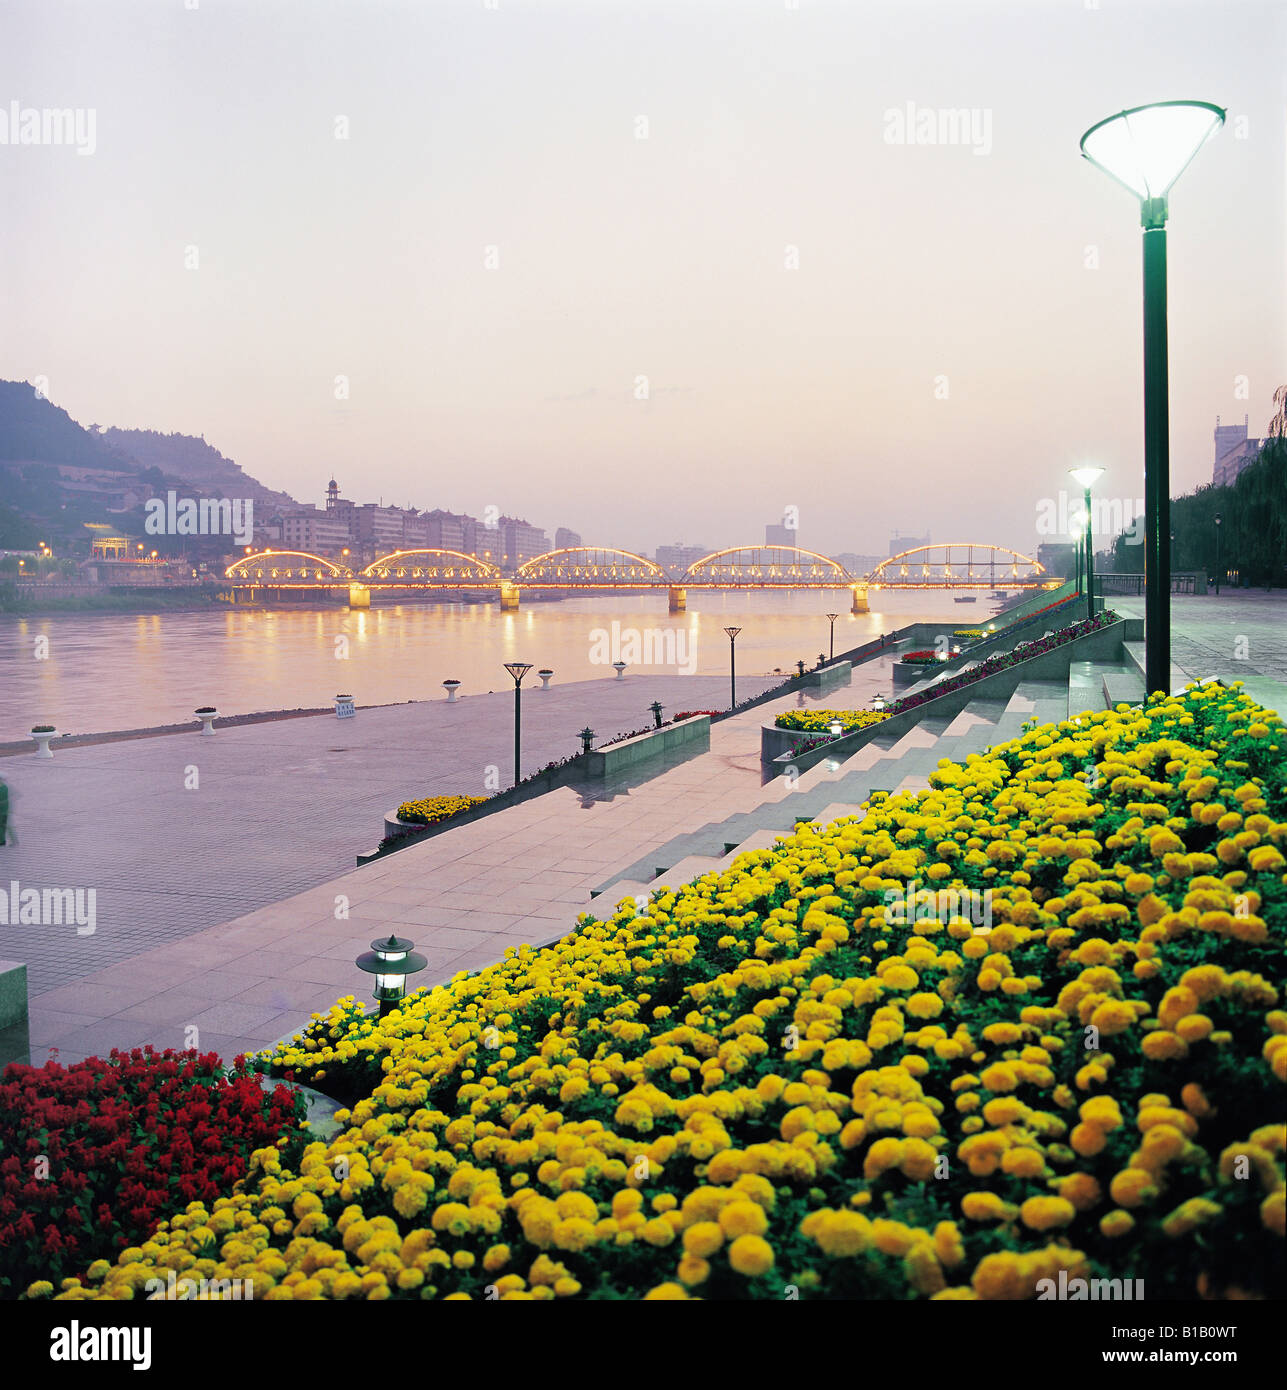 bridge over Yellow River at night,Lanzhou,Gansu,China,yellow flowers in the foreground Stock Photo